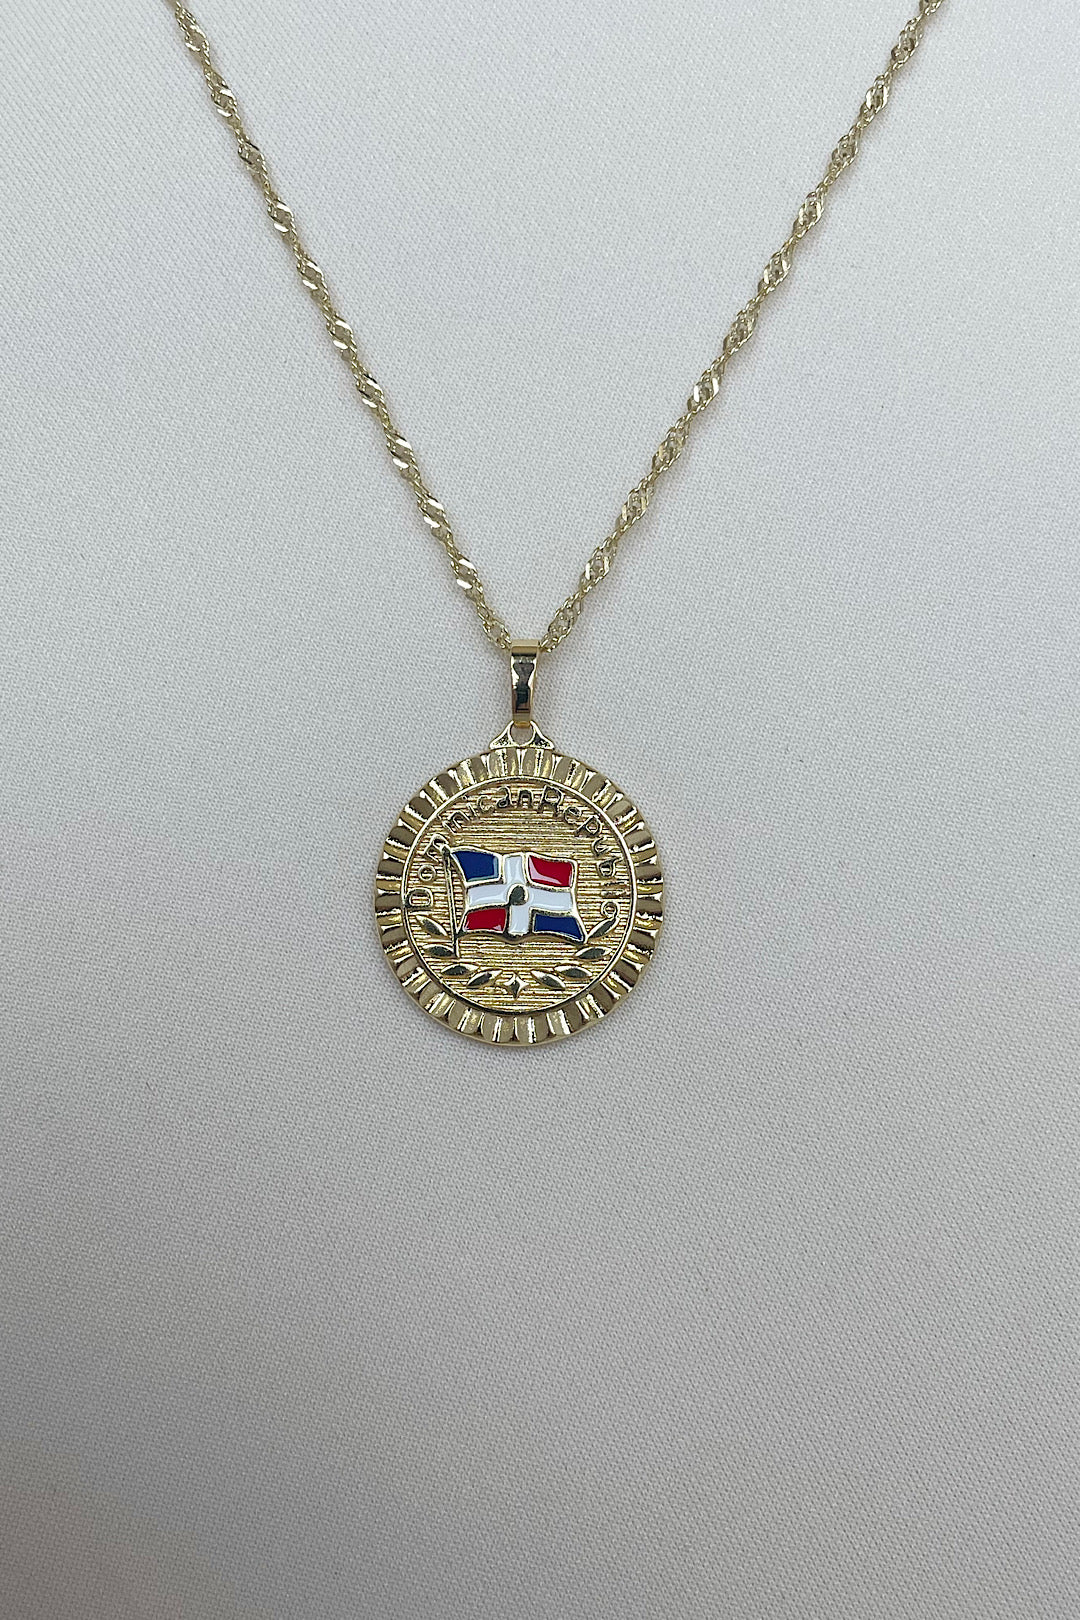 Dominican Republic flag Necklace